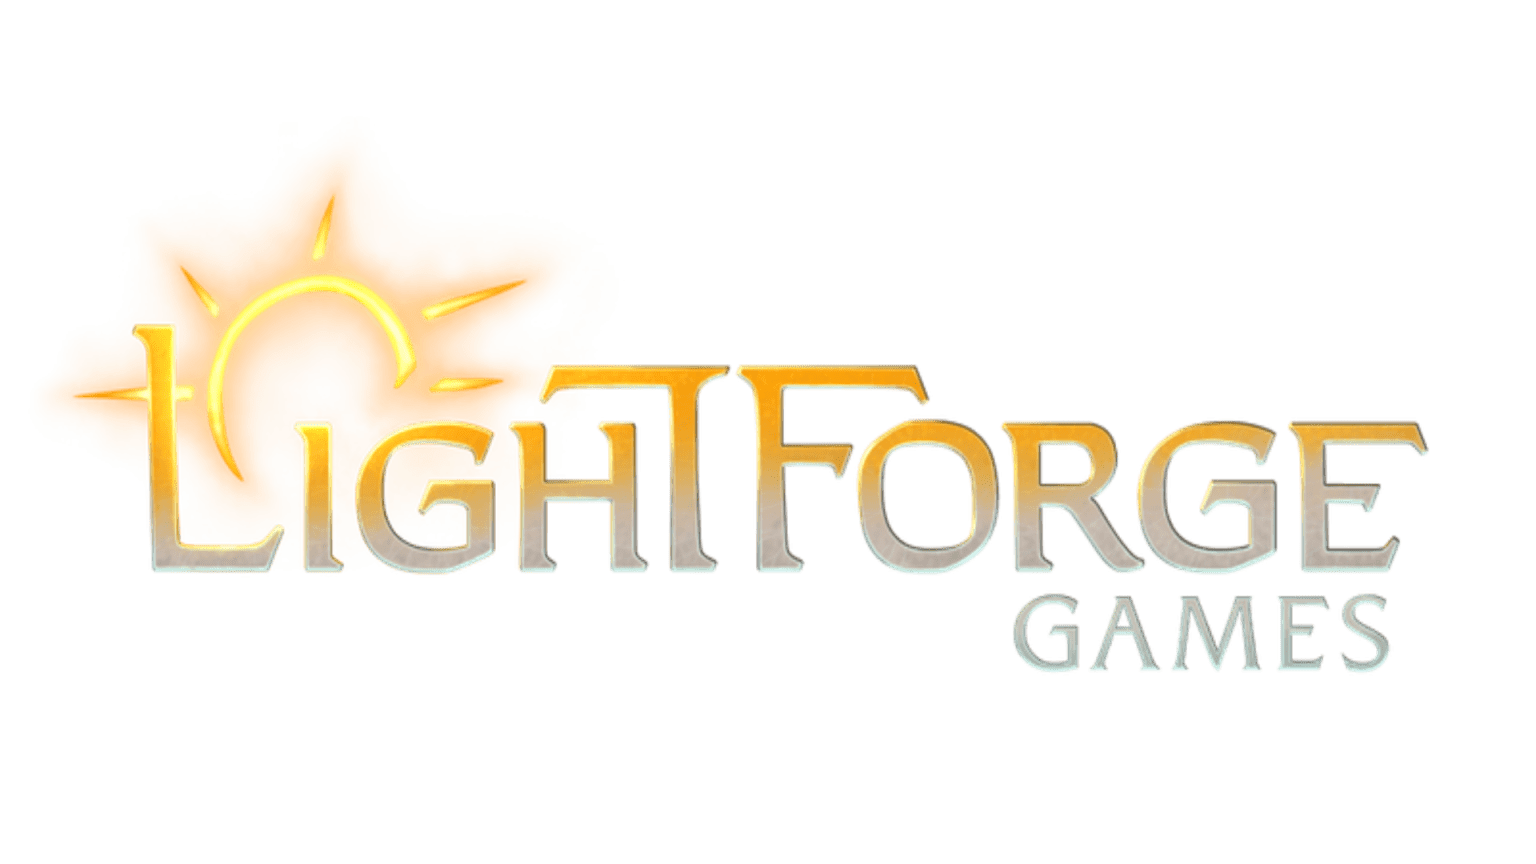 Lightforge Games - generacion xbox